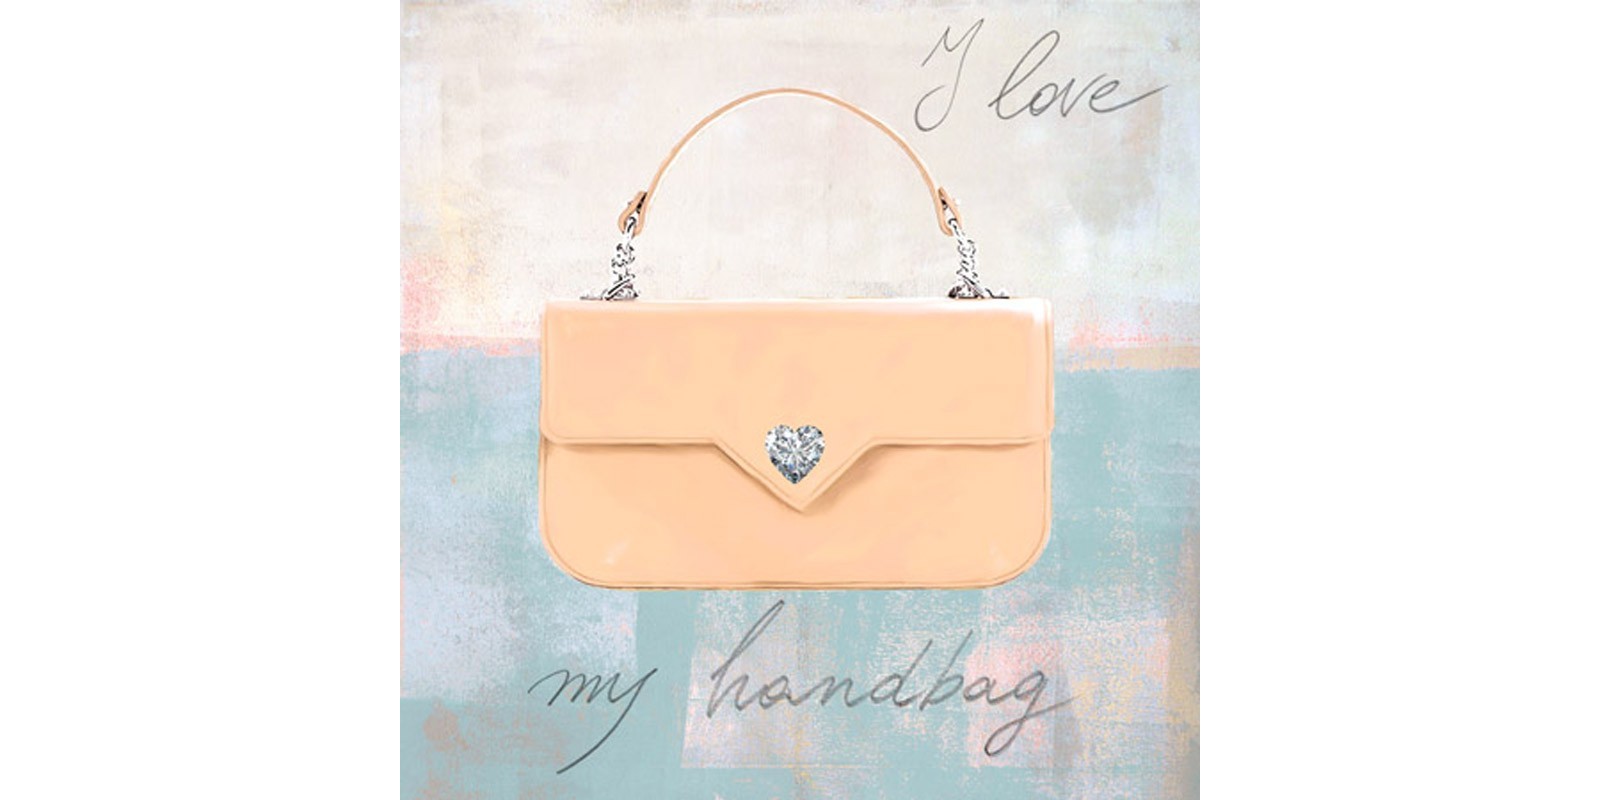 Michelle Clair - I Love my Handbag